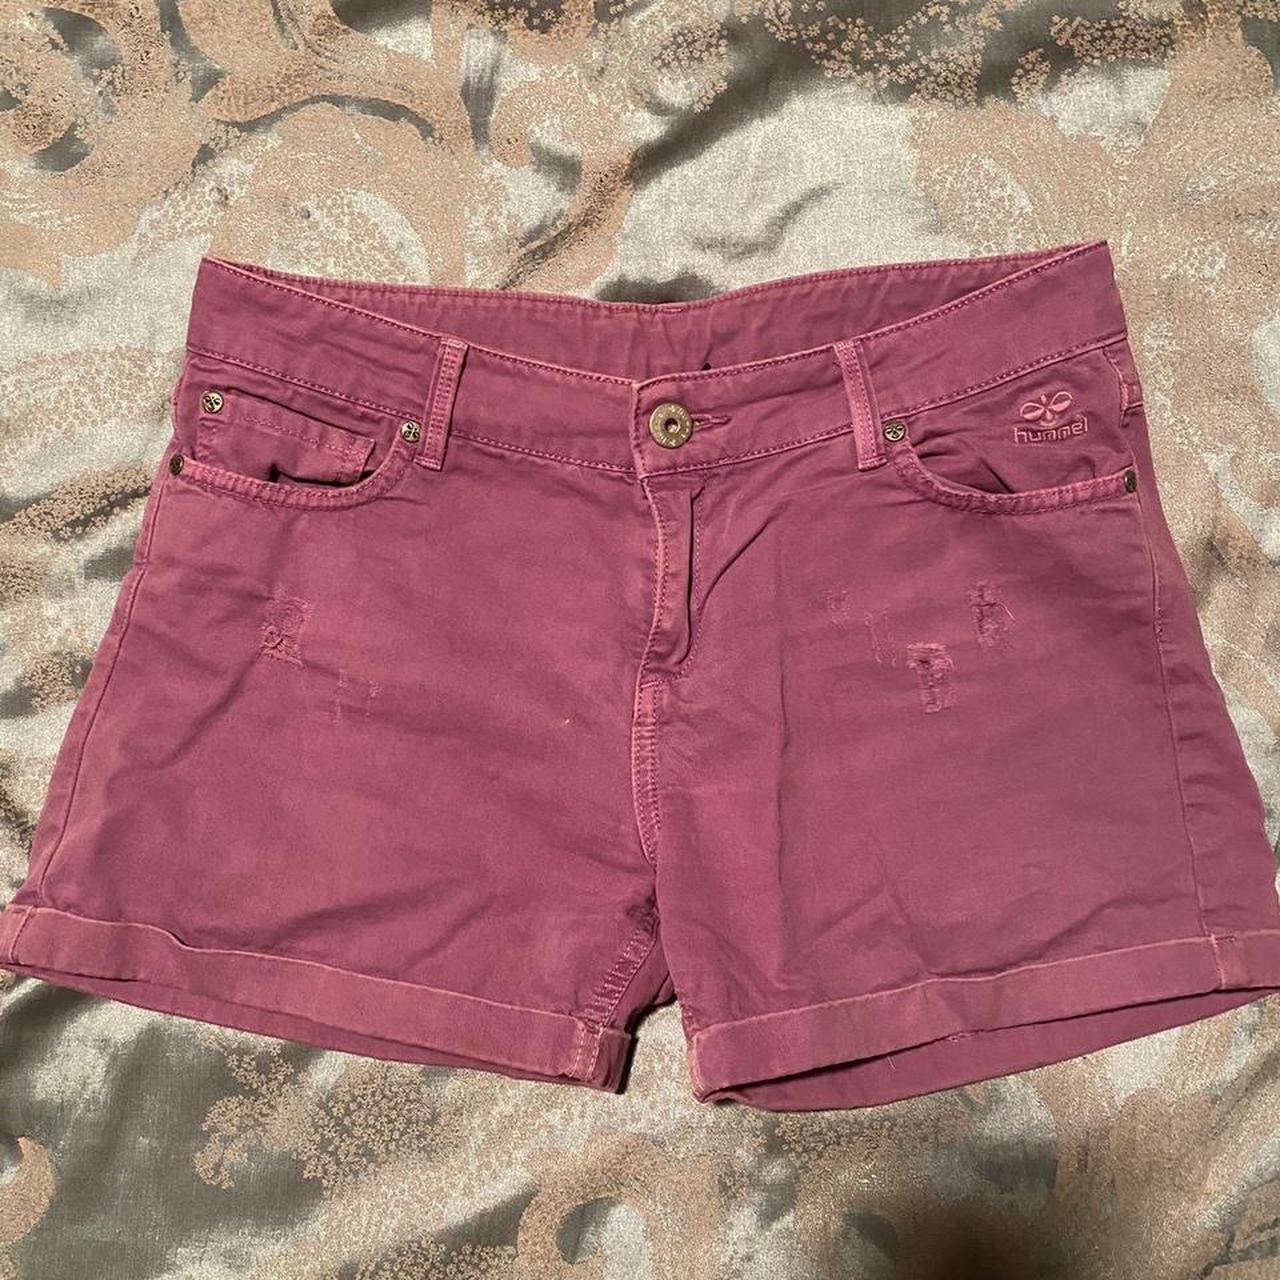 Hummel Women's Purple and Pink Shorts